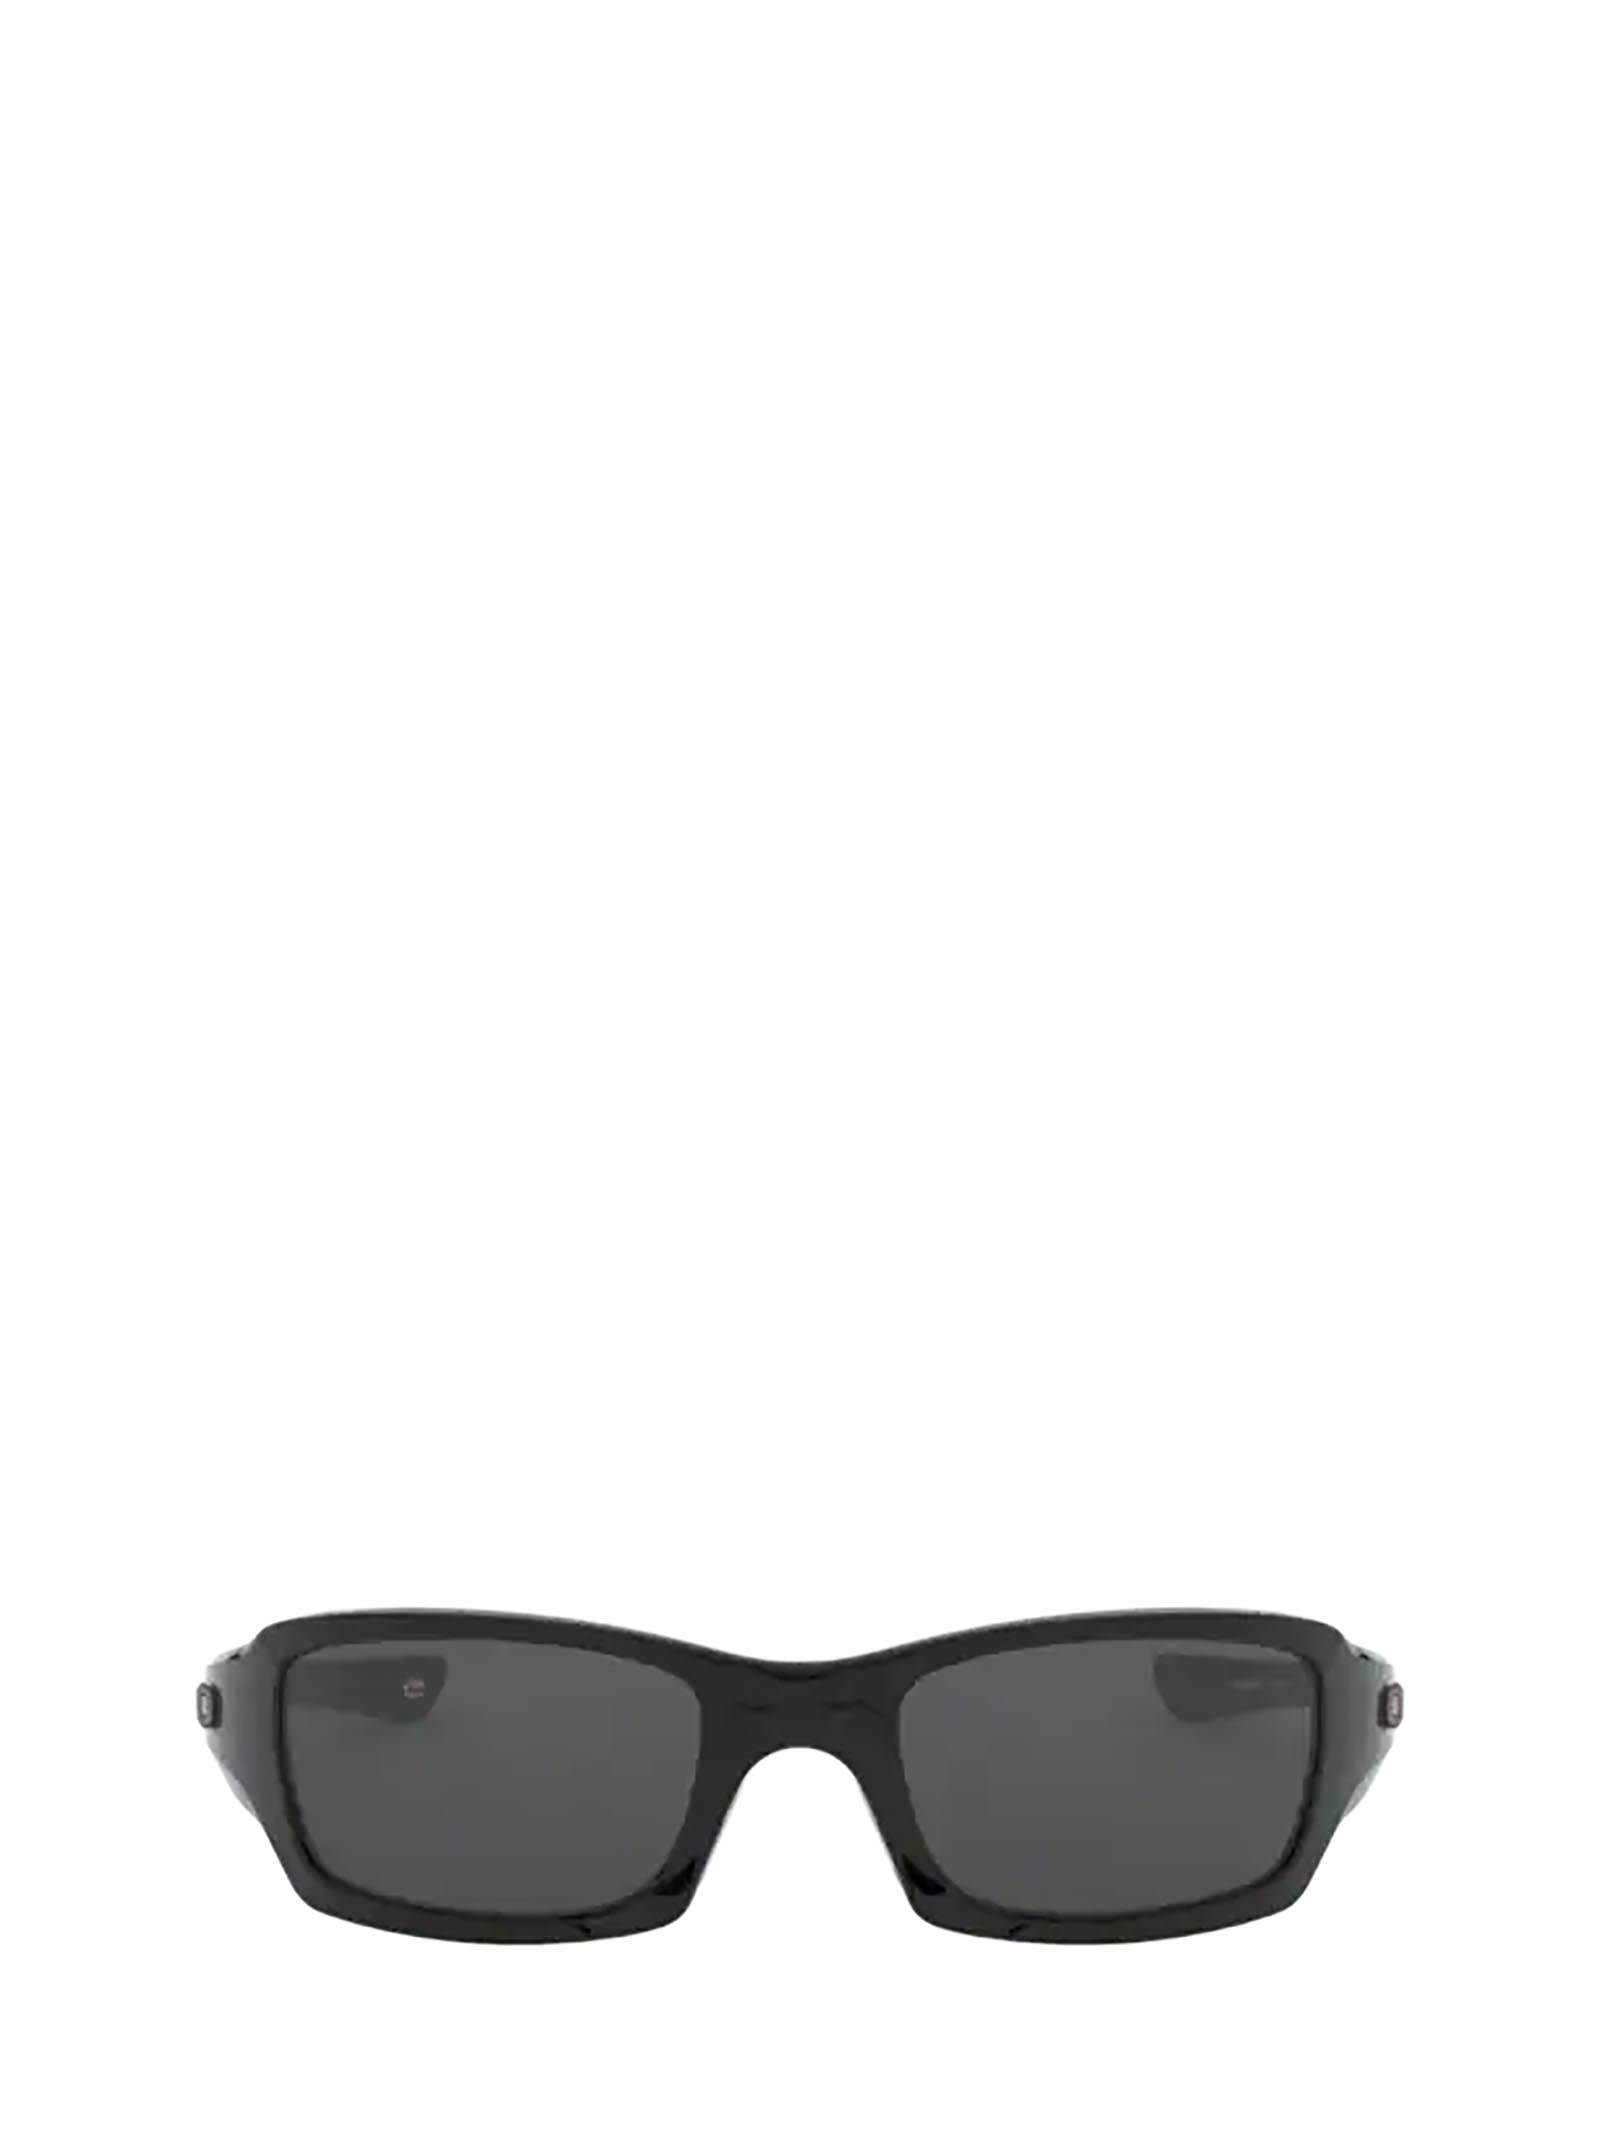 Shop Oakley Oo9238 Polished Black Sunglasses